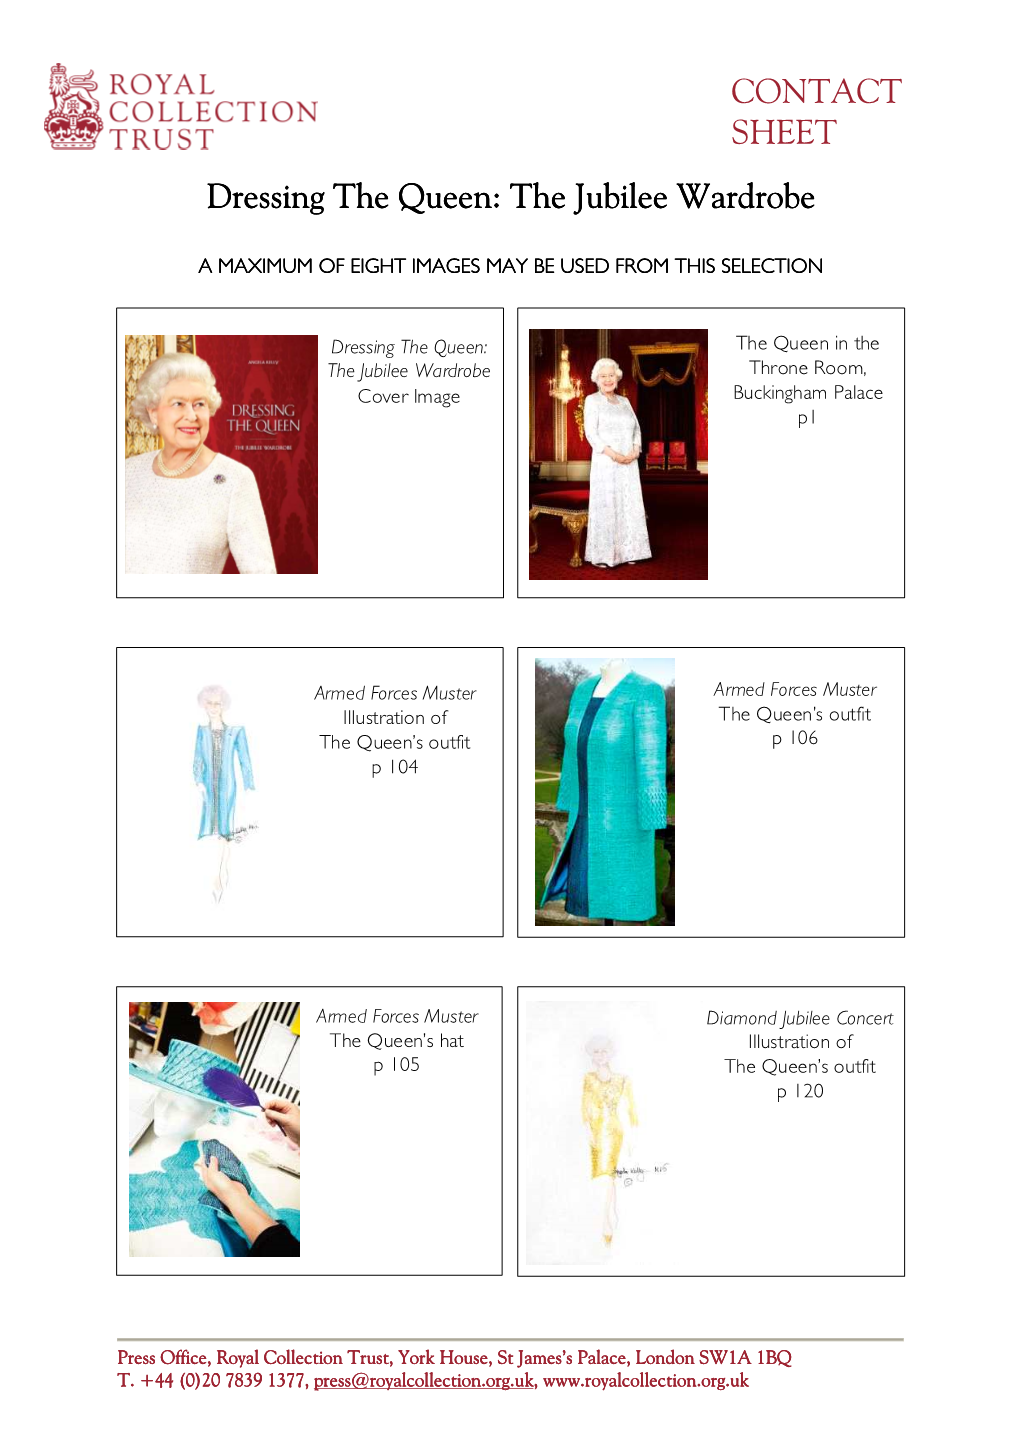 Contact Sheet Dressing the Queen